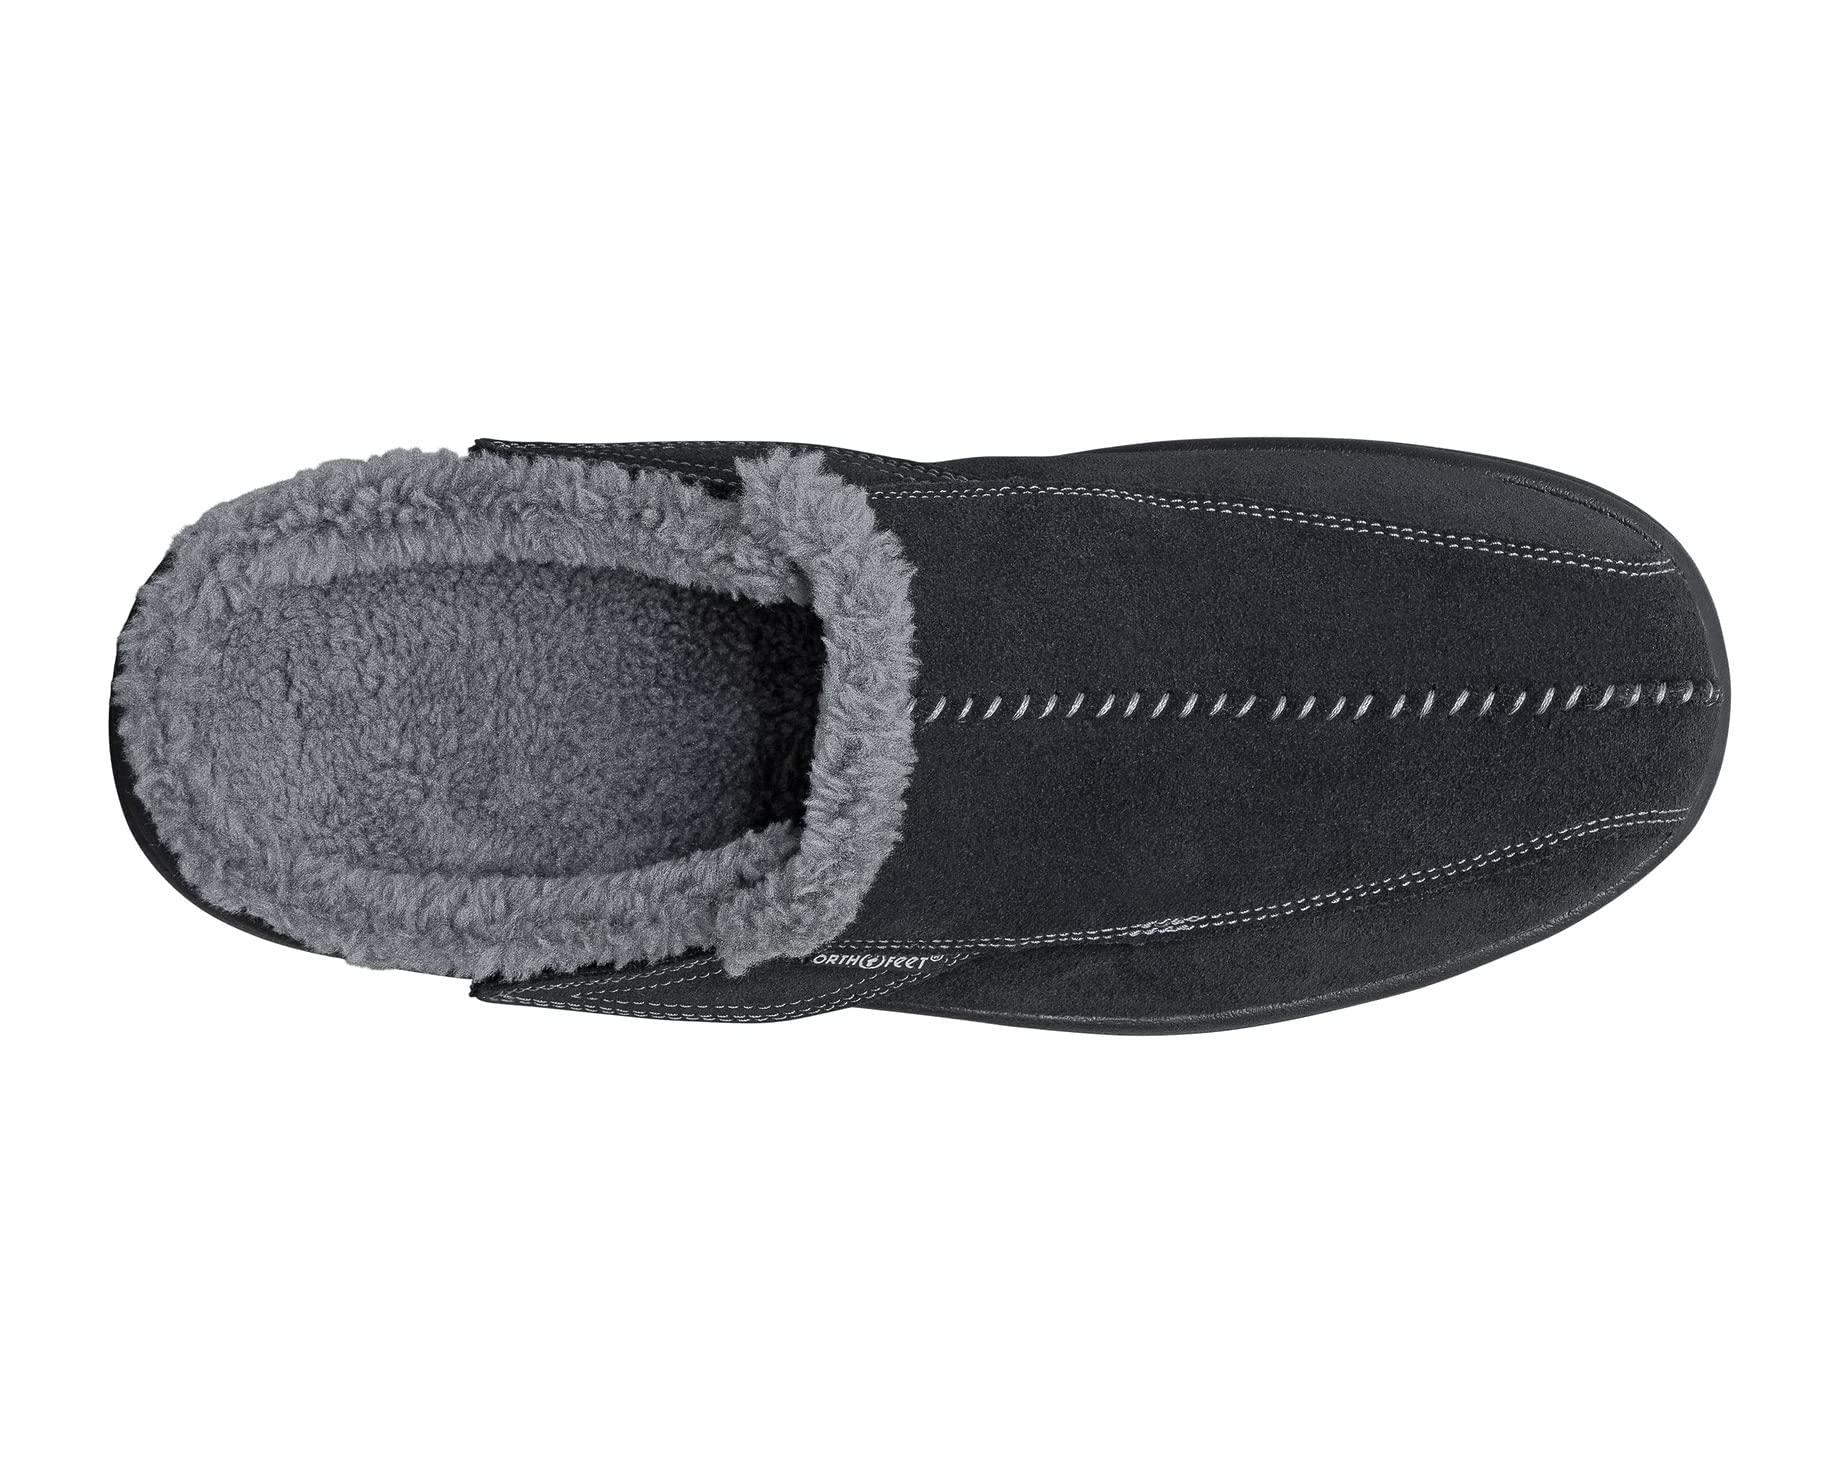 Сабо Asheville Orthofeet, черный few fashion sandals for women 2021 summer hook black genuine leather sports sandals cozy casual flat design gladiator sandals